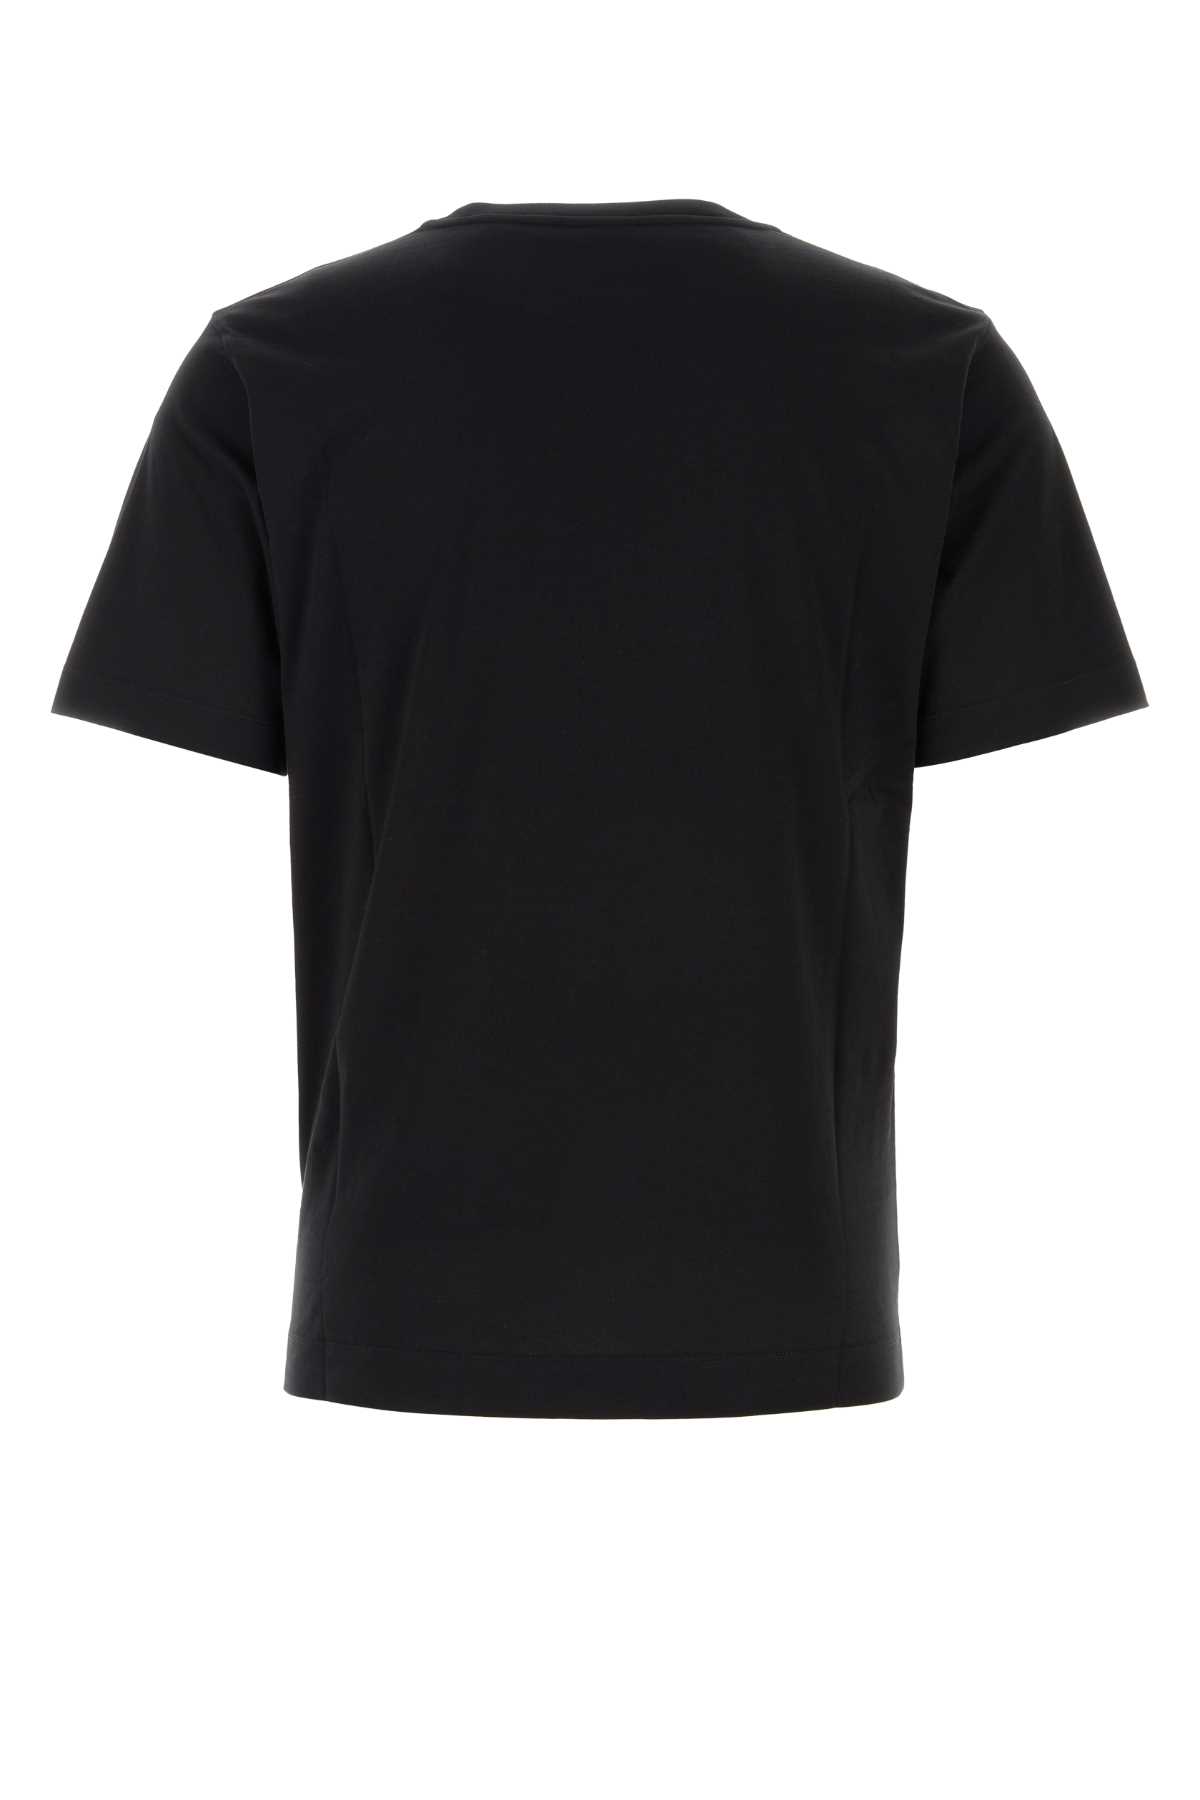 Shop Dries Van Noten Black Cotton T-shirt